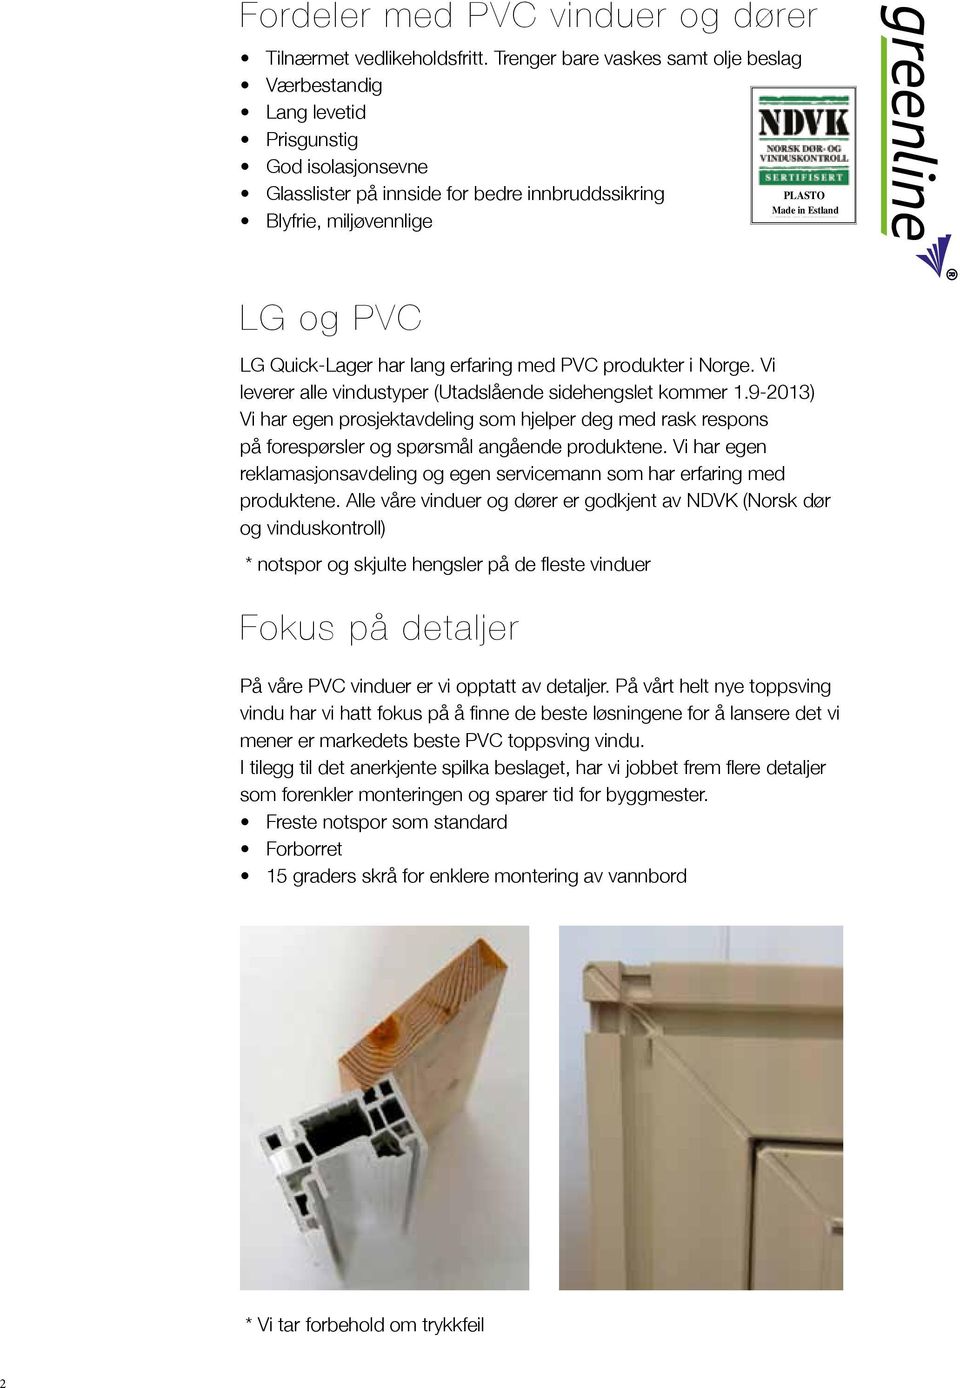 LG Quick-Lager har lang erfaring med PVC produkter i Norge. Vi leverer alle vindustyper (Utadslående sidehengslet kommer 1.